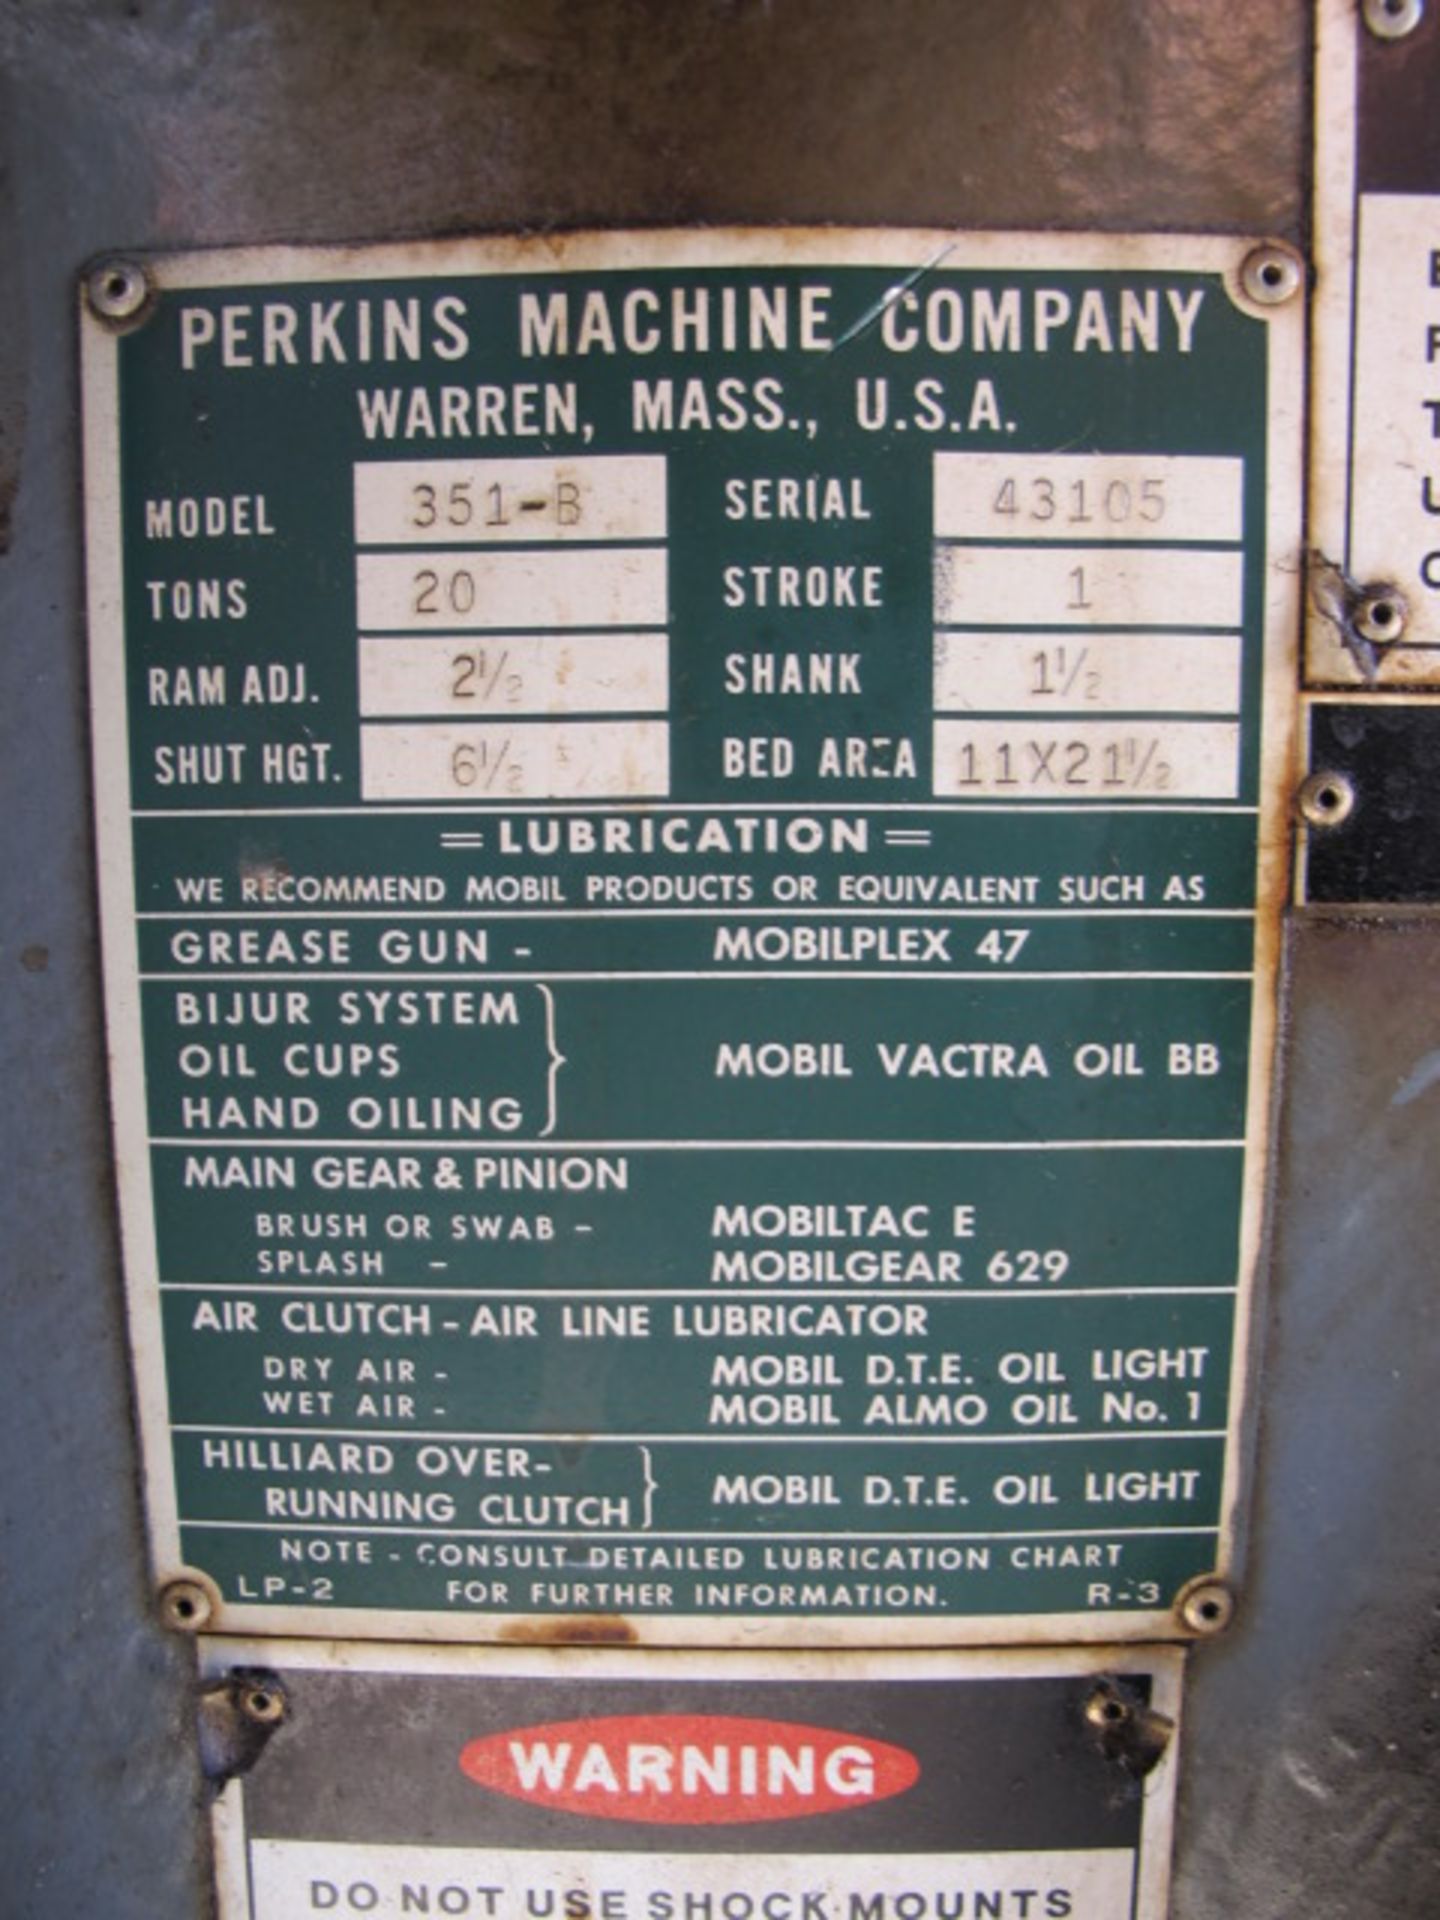 Perkins mdl. 351-B 20 Ton OBI Stamping Press s/n 43105 w/ 1" Stroke, 11" x 21 1/2" Bolster Area - Image 3 of 3